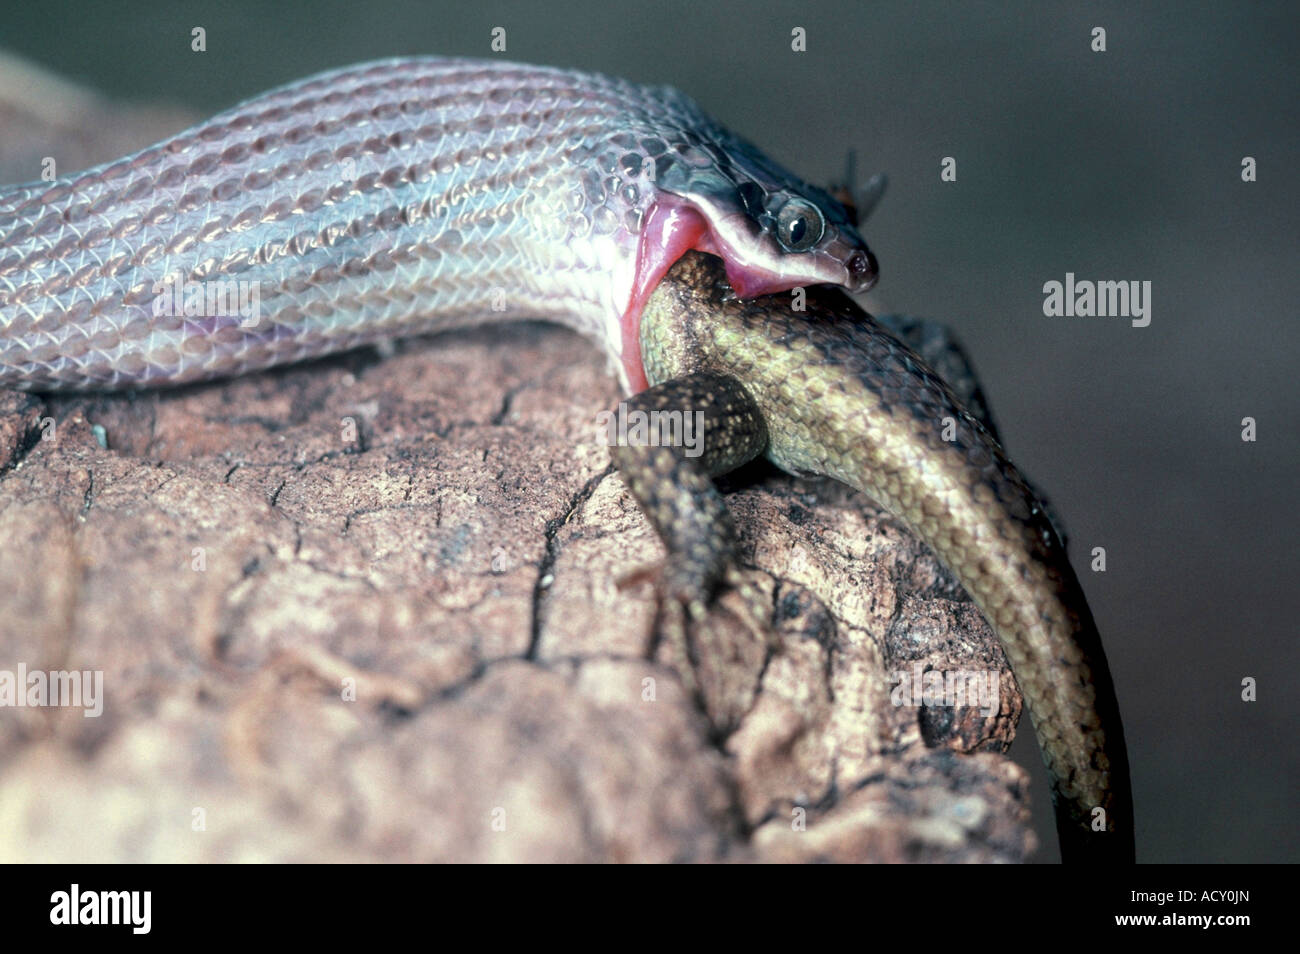 Herald Snake, Crotaphopeltis hotamboeia Foto Stock